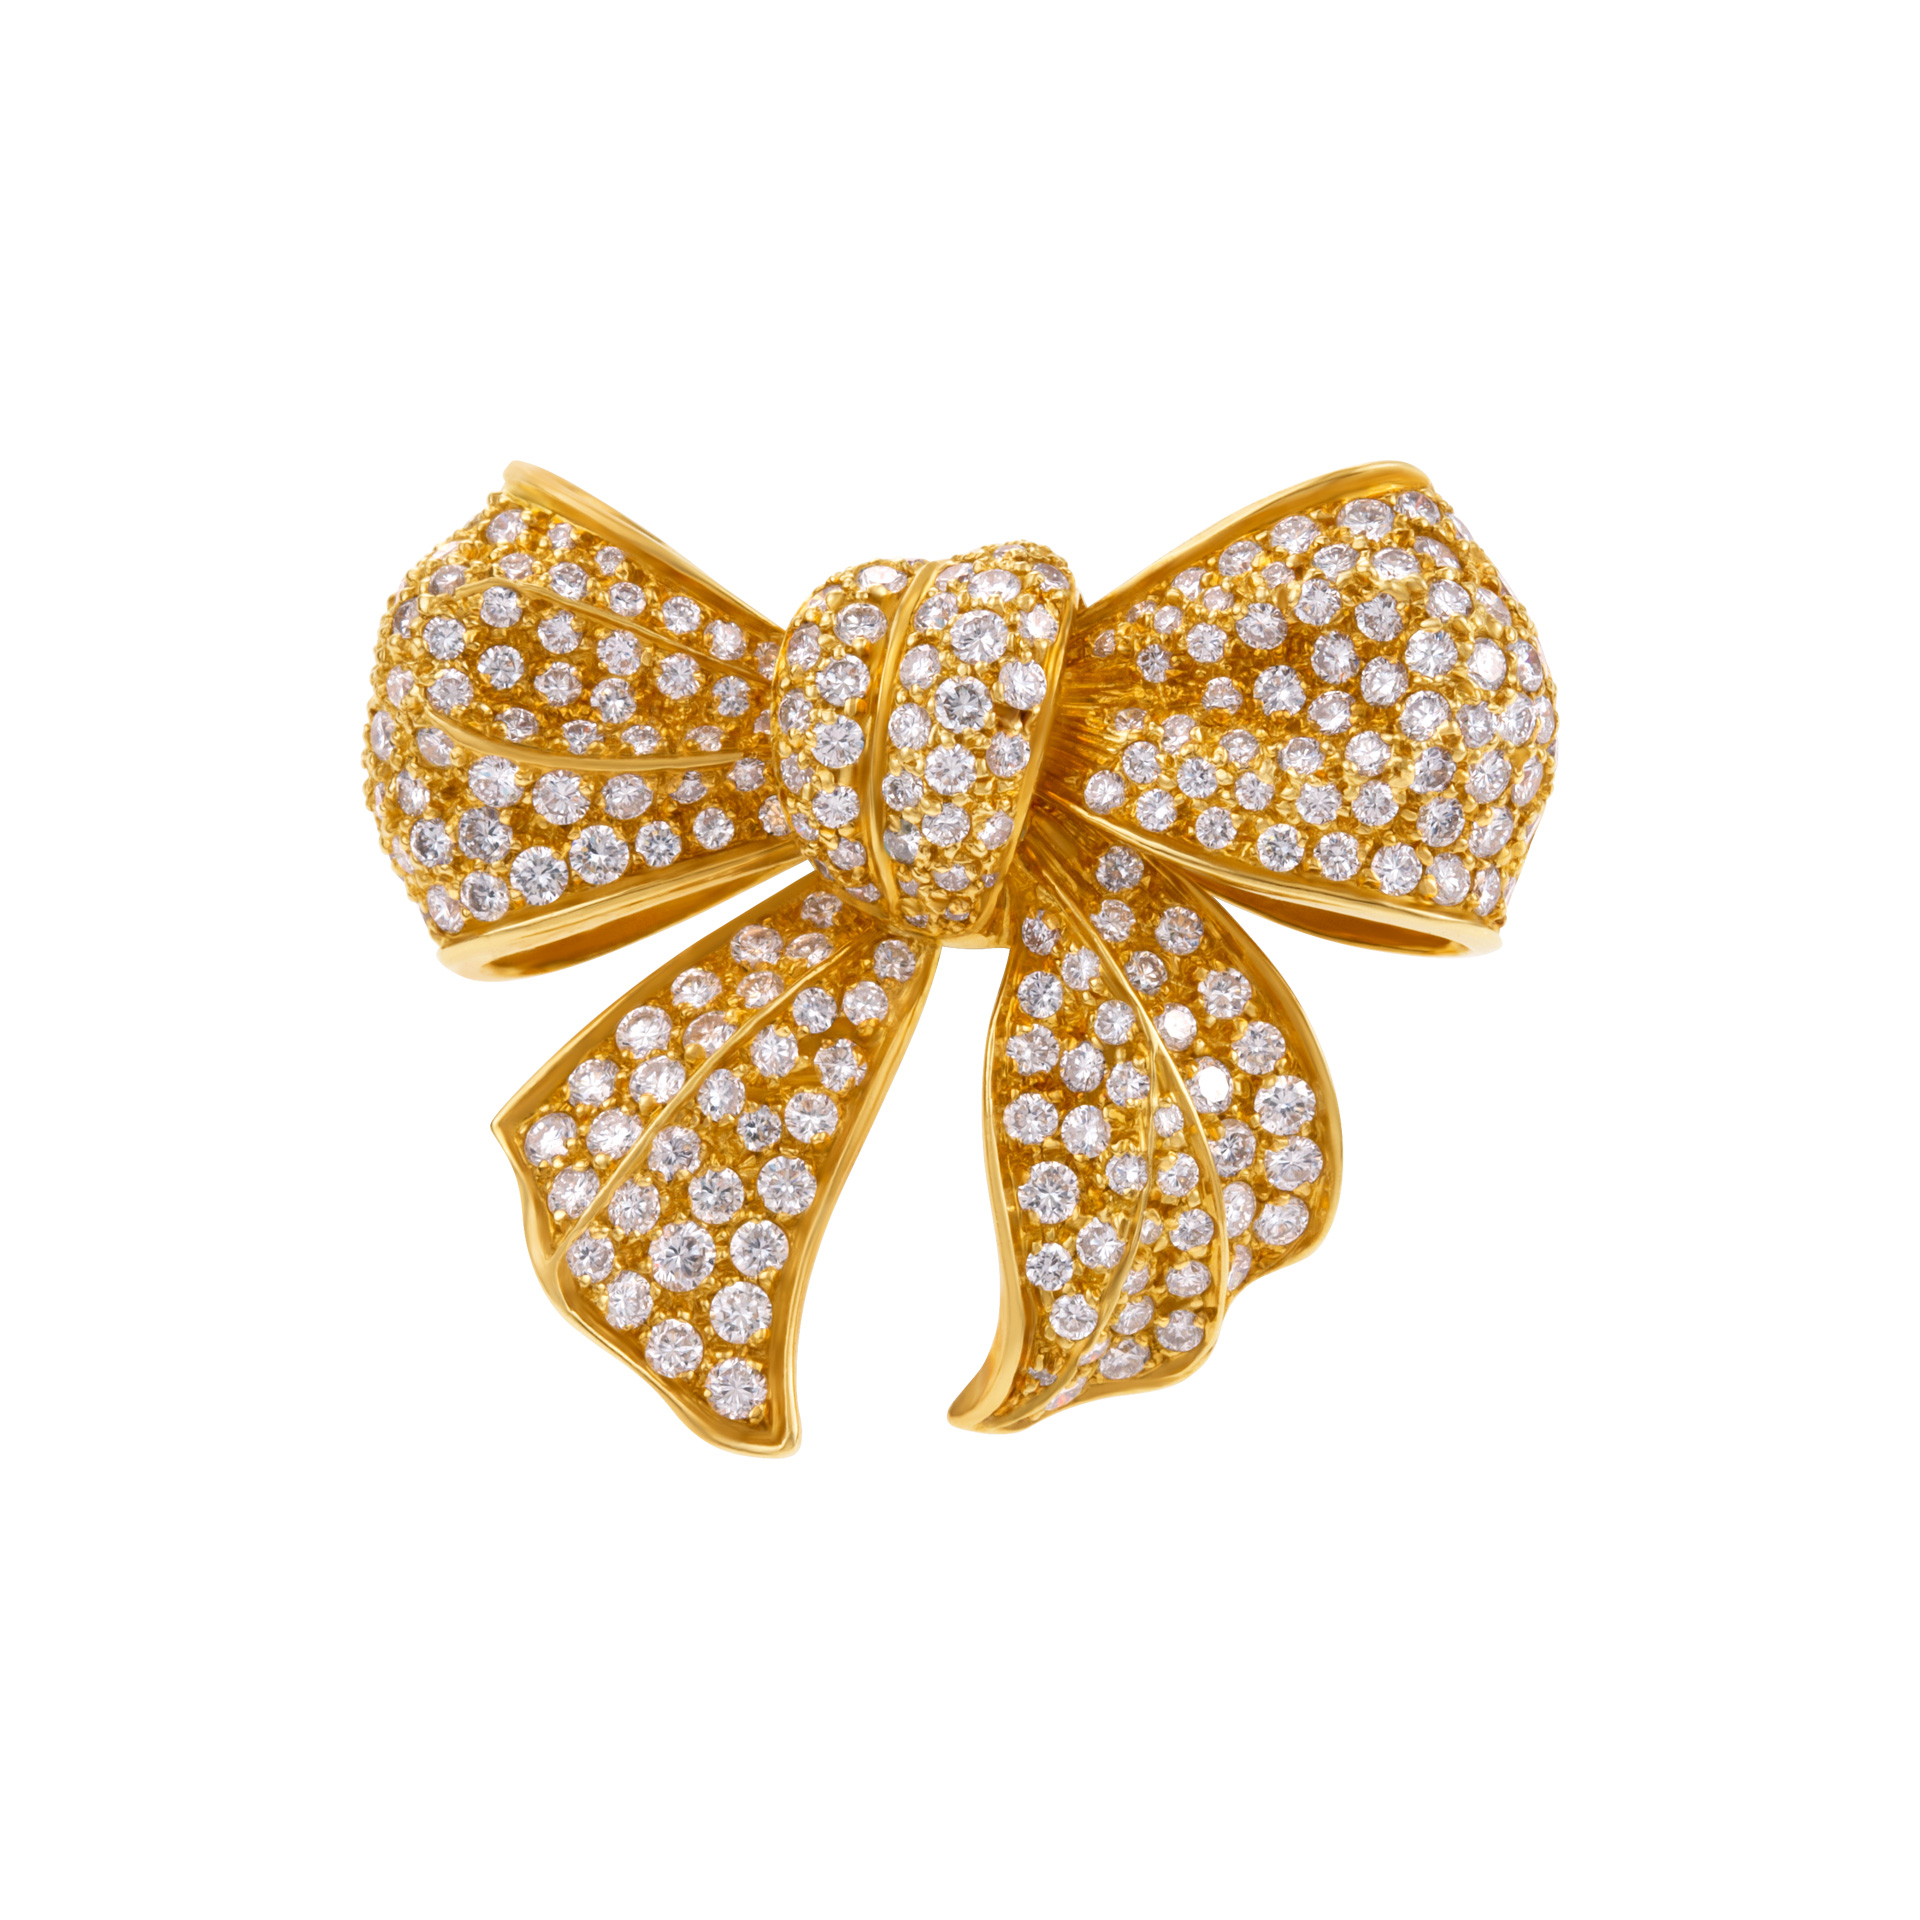 Chanel diamond bow broach in 18K gold